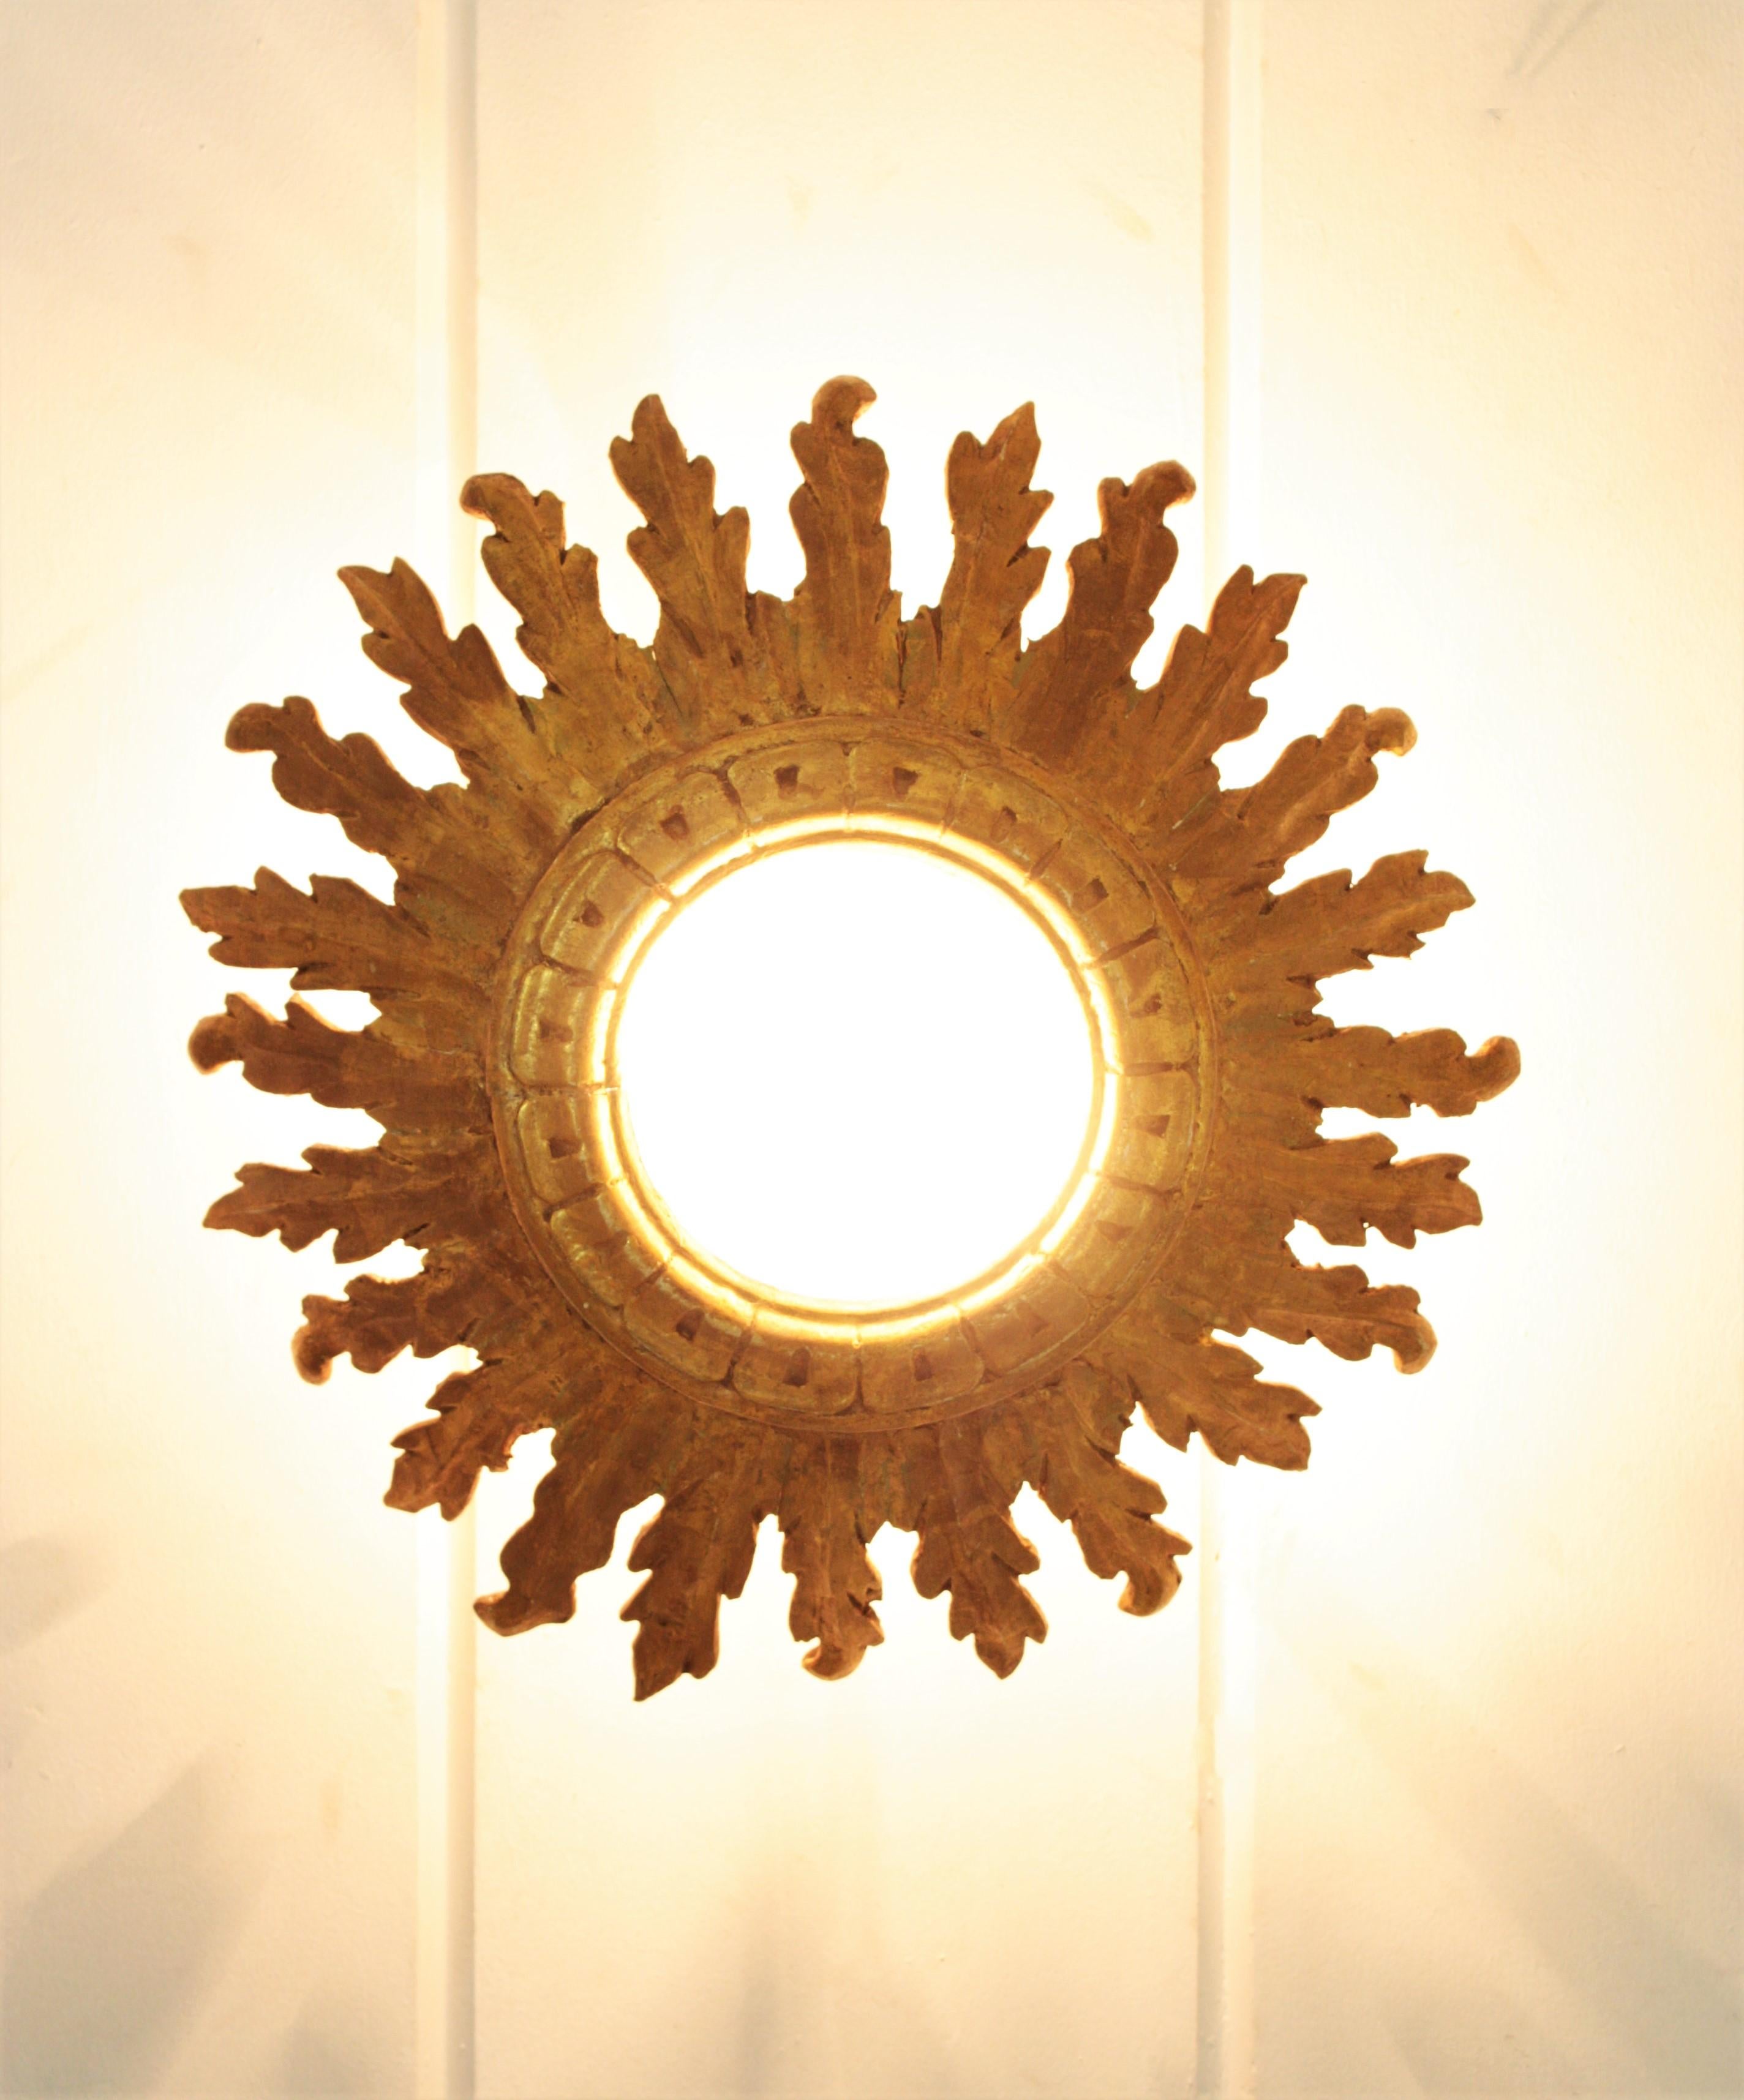 Sunburst Crown Ceiling Flush Mount Light Fixture in Giltwood, Spanish Baroque For Sale 4